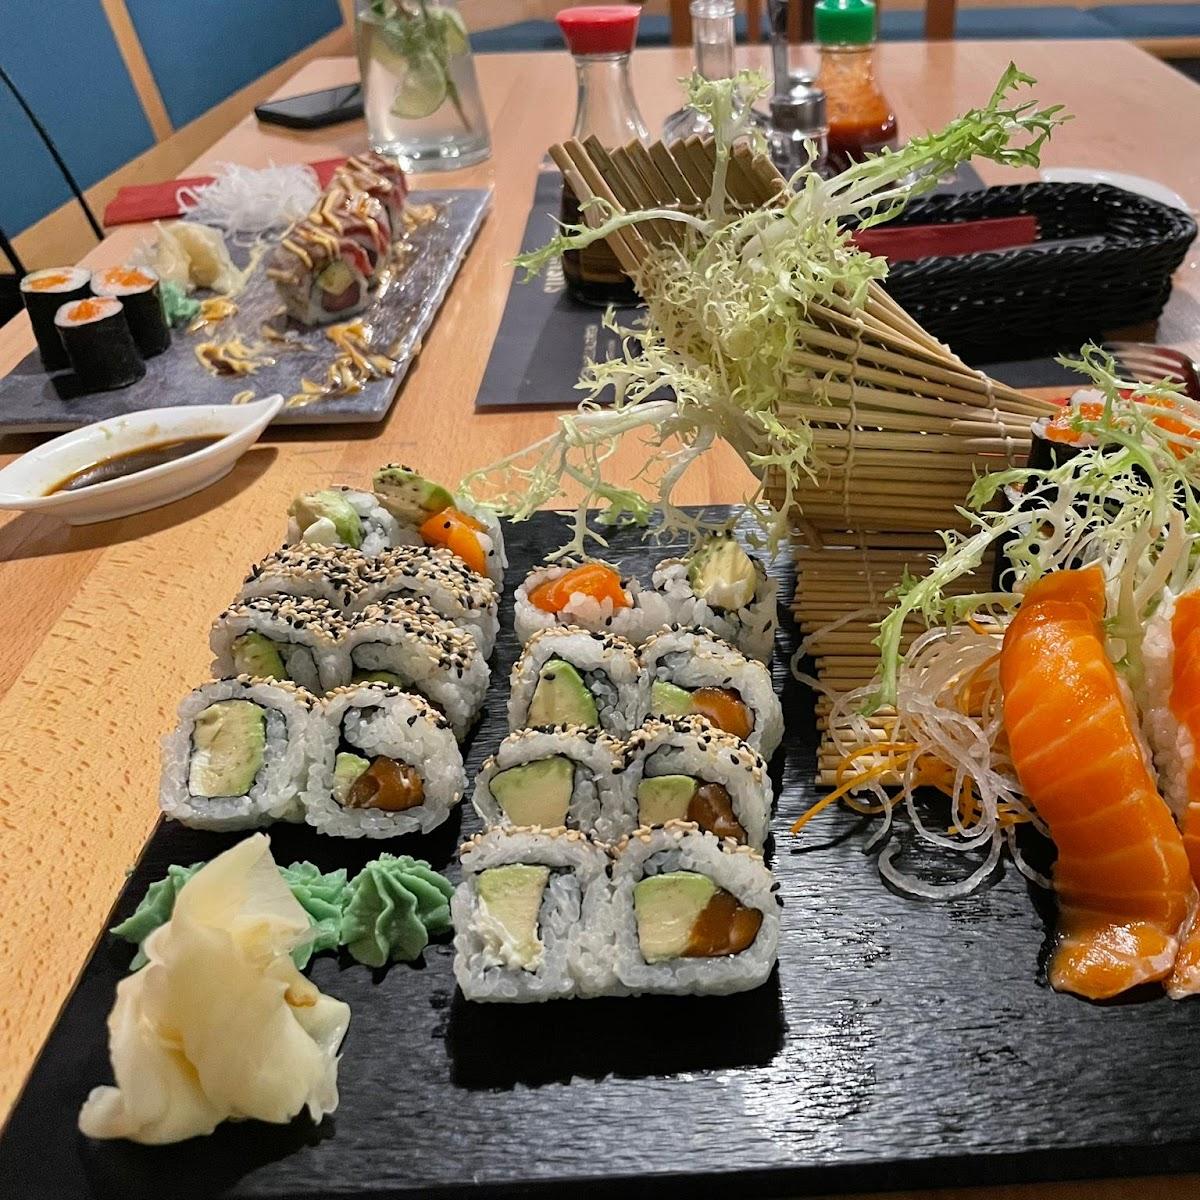 Restaurant "Sushi & Nem" in Hinterzarten